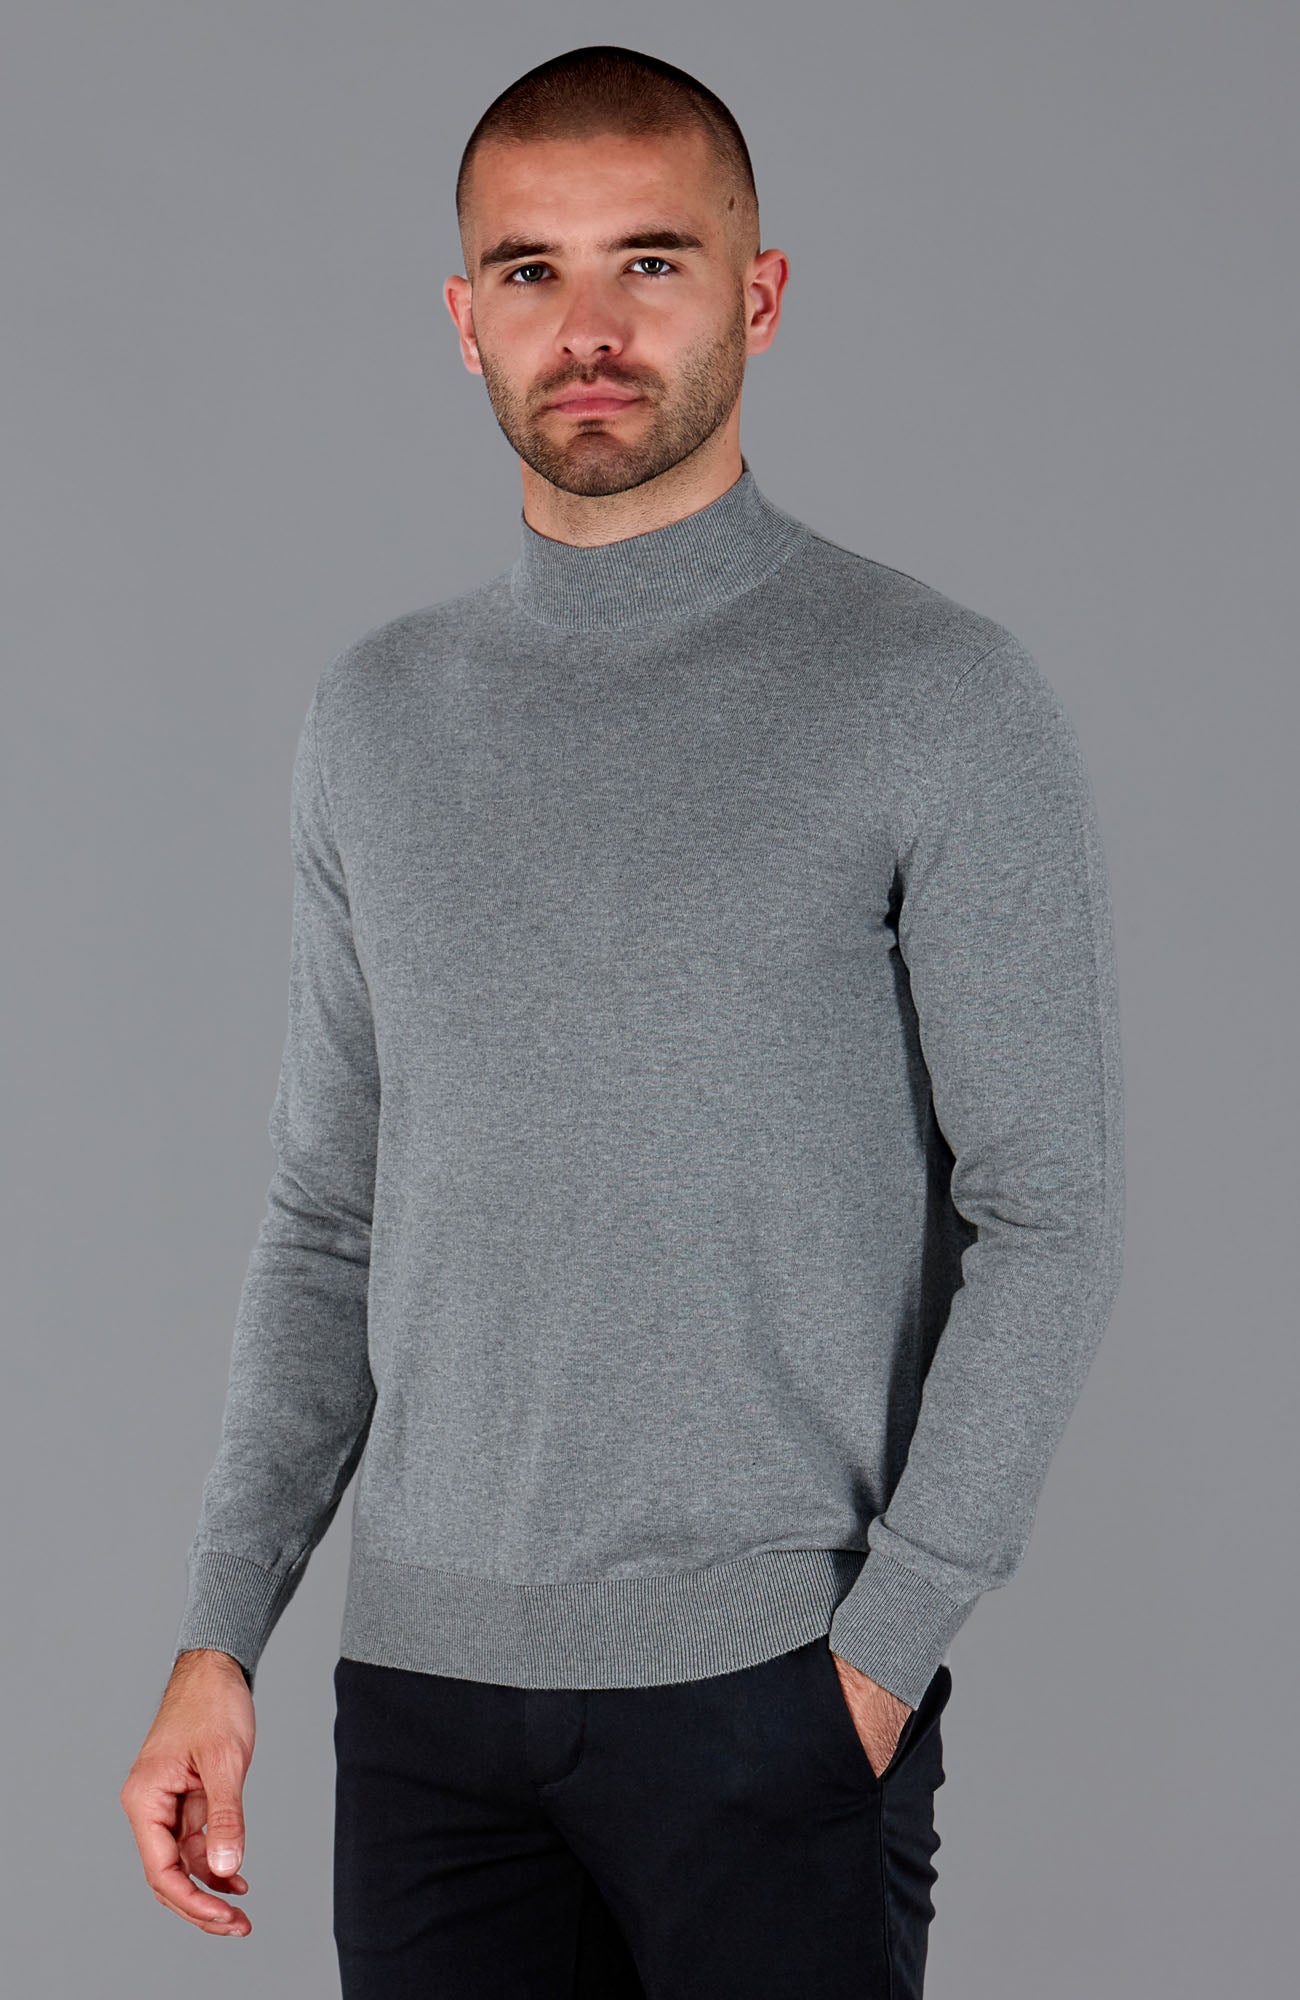 grey mens mock turtle neck sweater